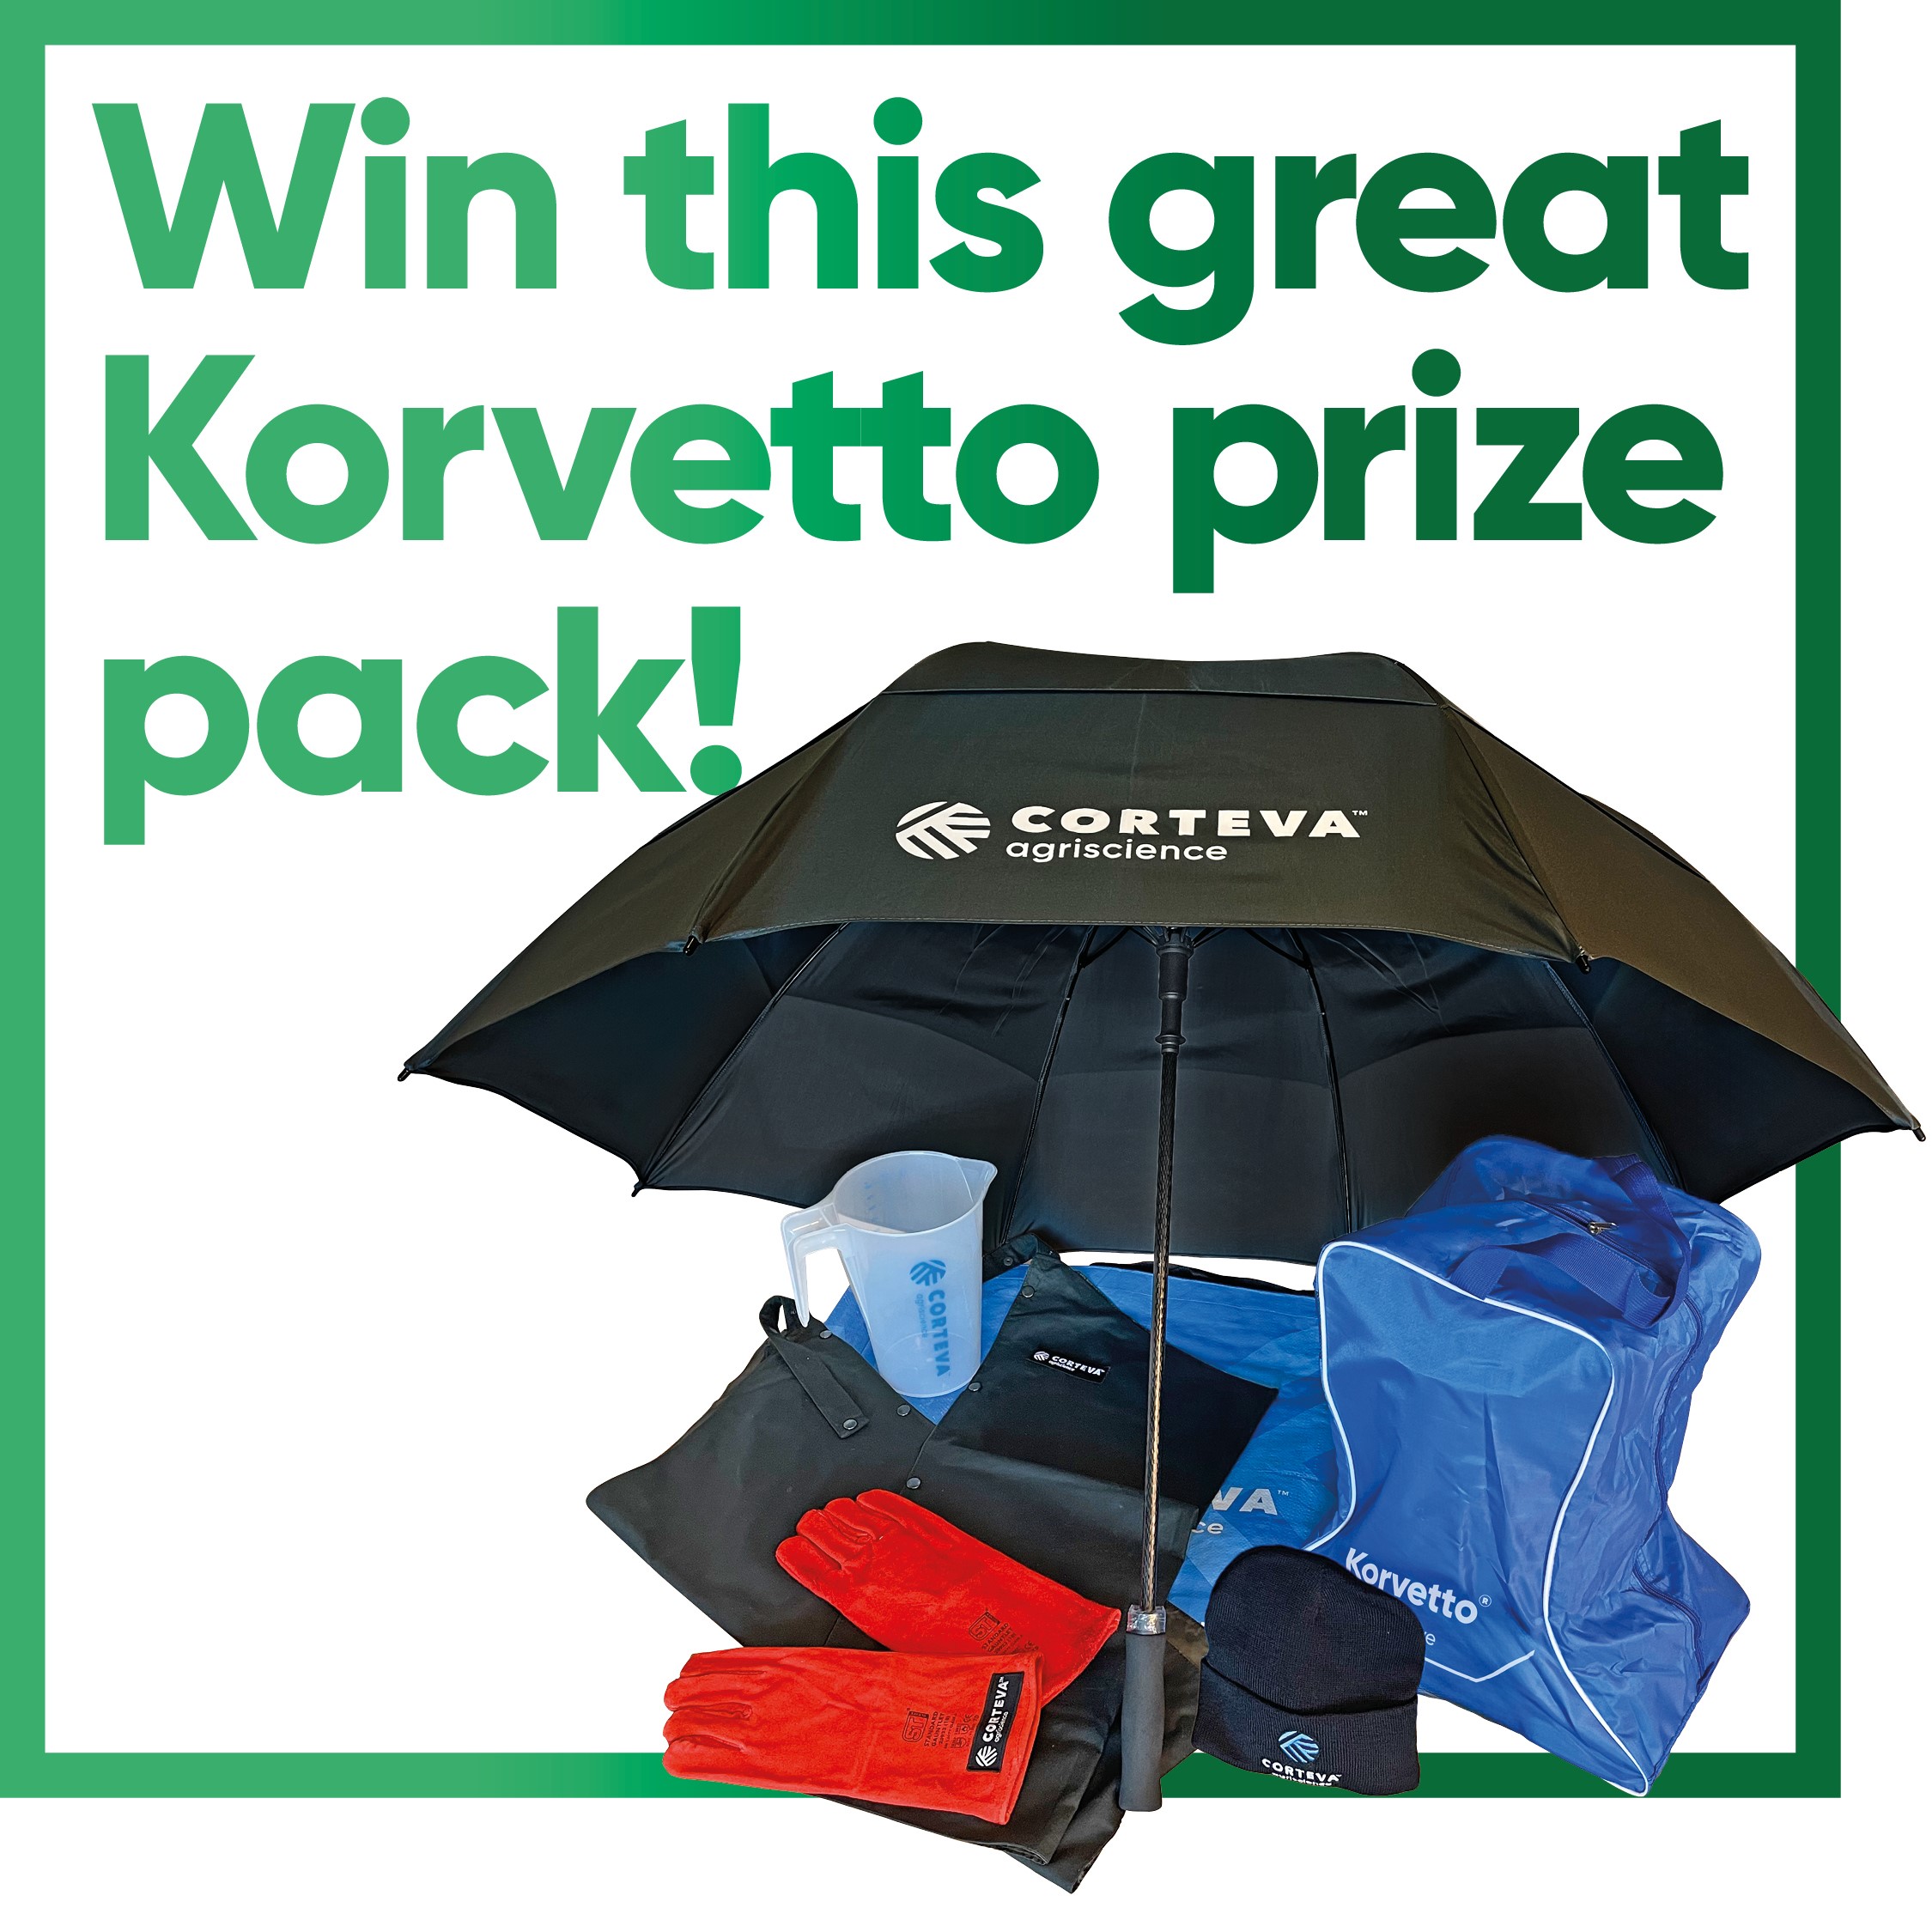 Win a Korvetto prize